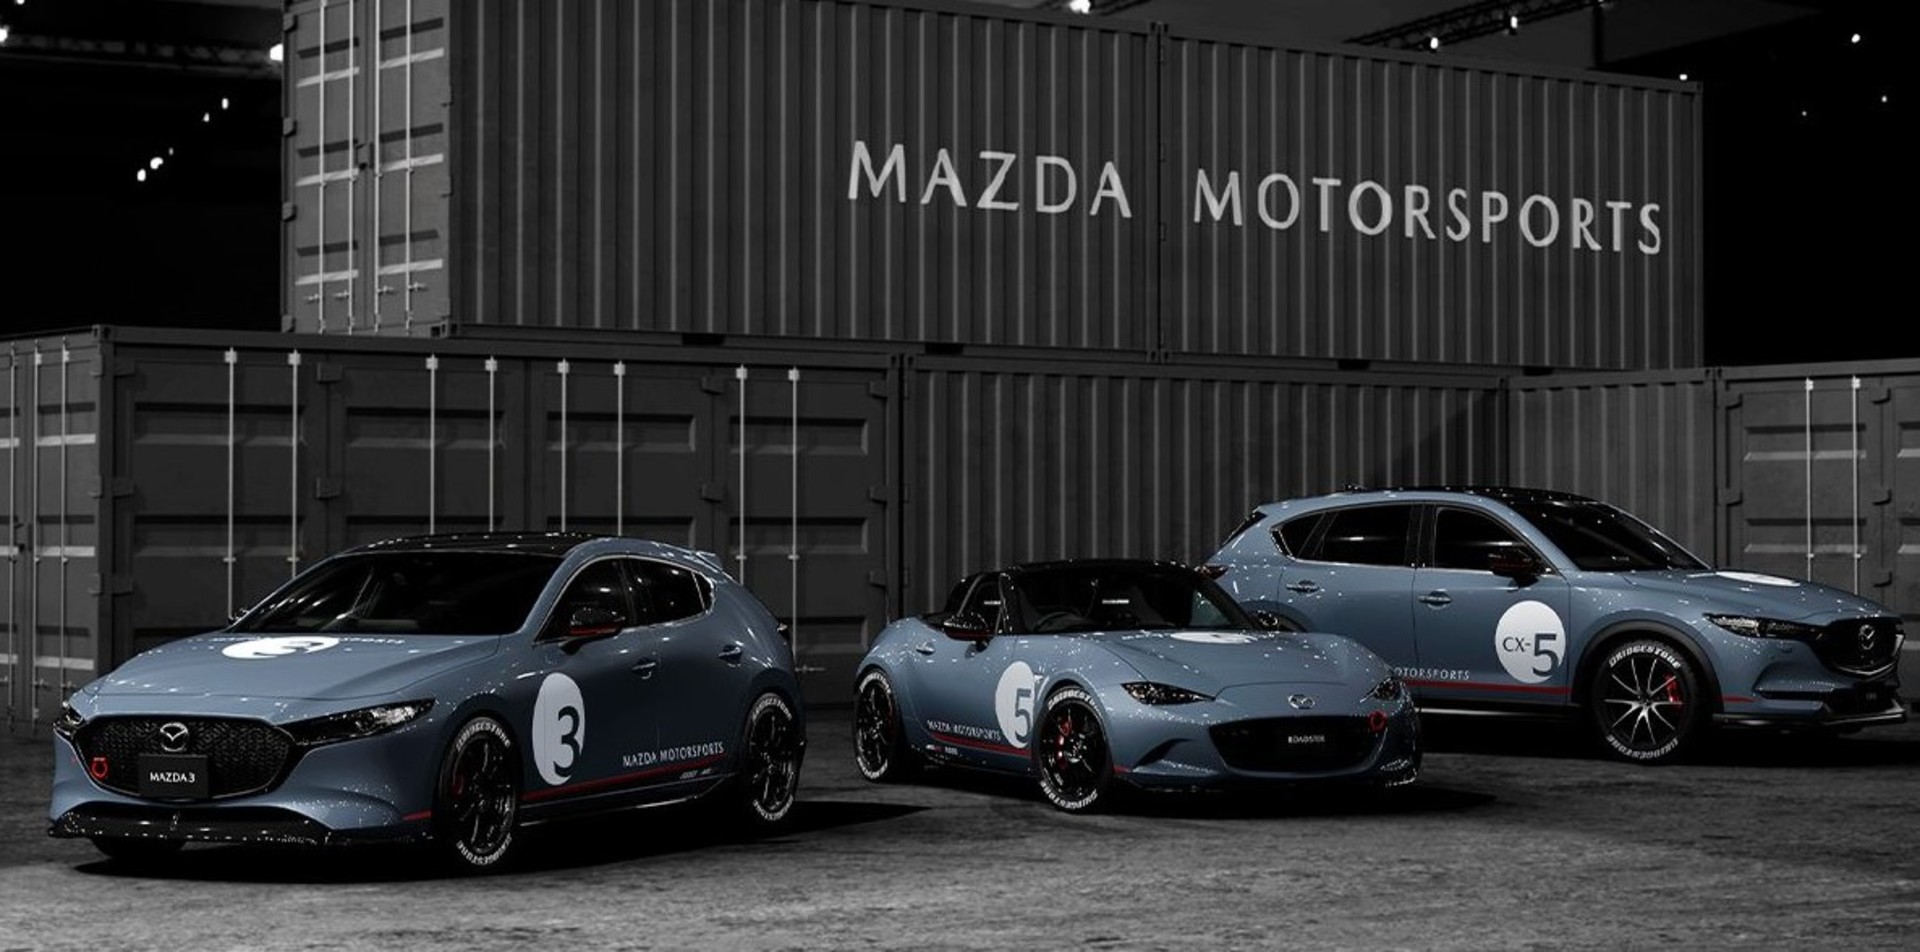 Mazda Motorsport